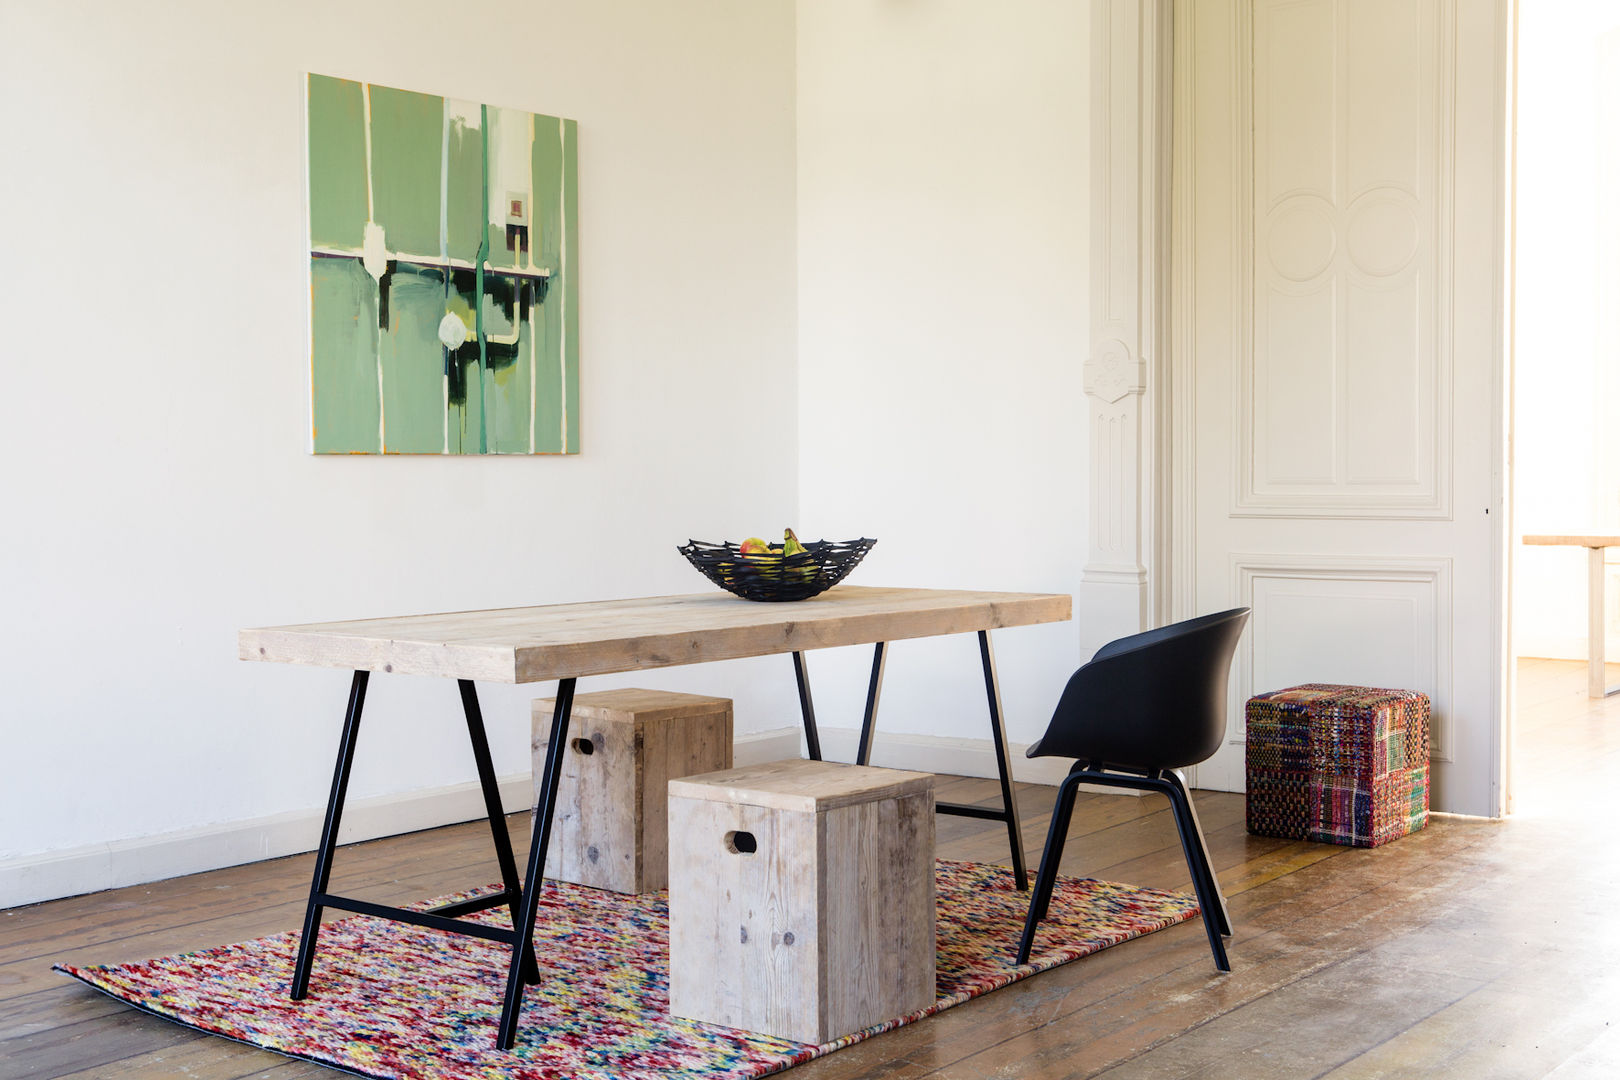 Tisch aus Bauholz mit Trägern, PURE Wood Design PURE Wood Design Comedores de estilo escandinavo Mesas